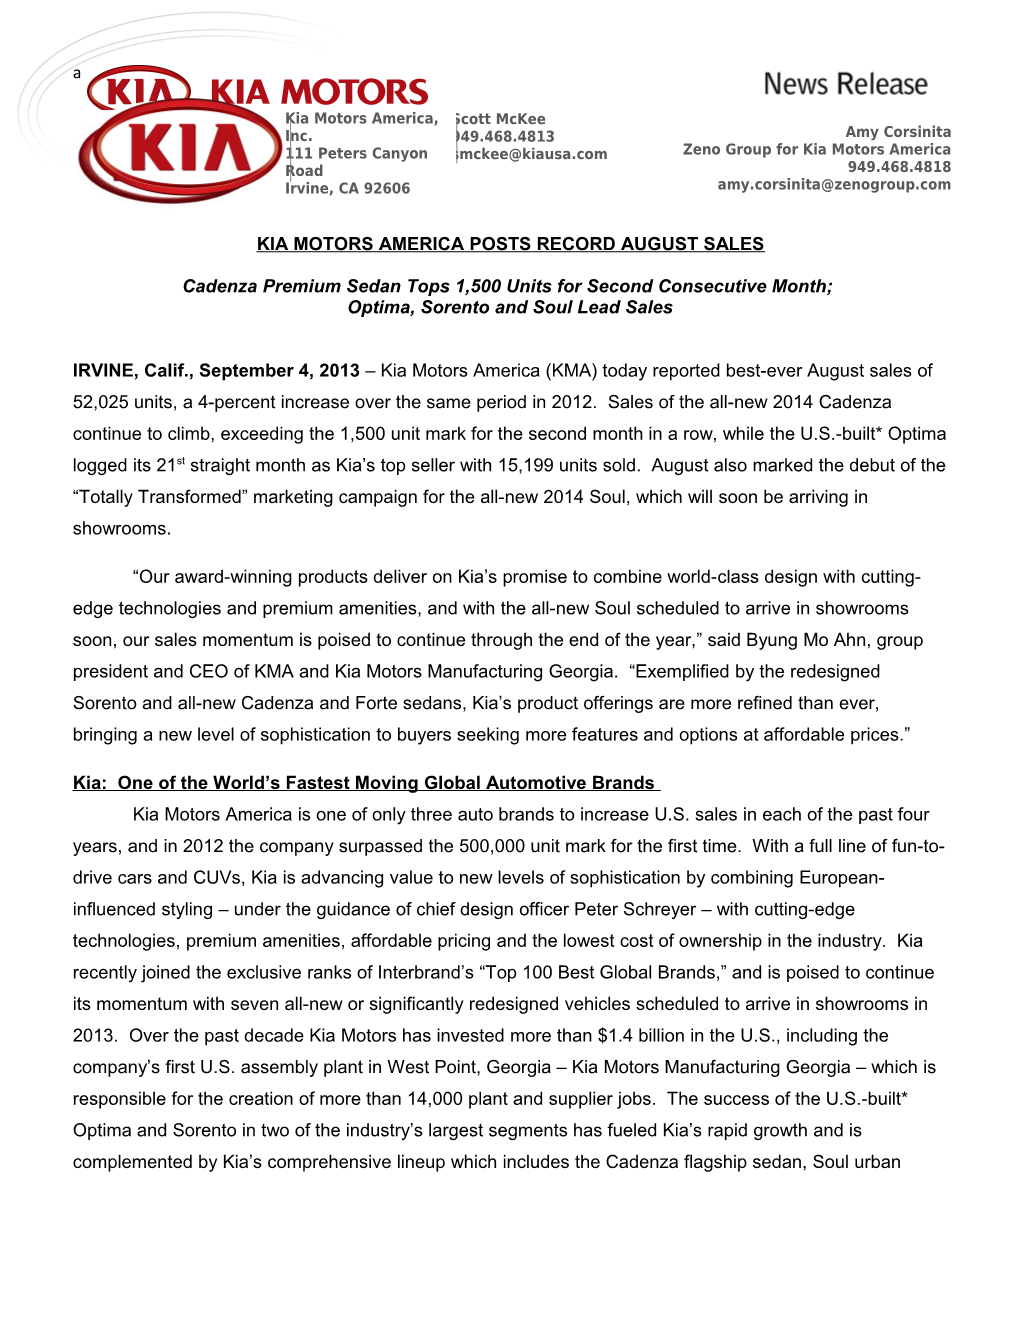 Kia Motors America Posts Record August Sales